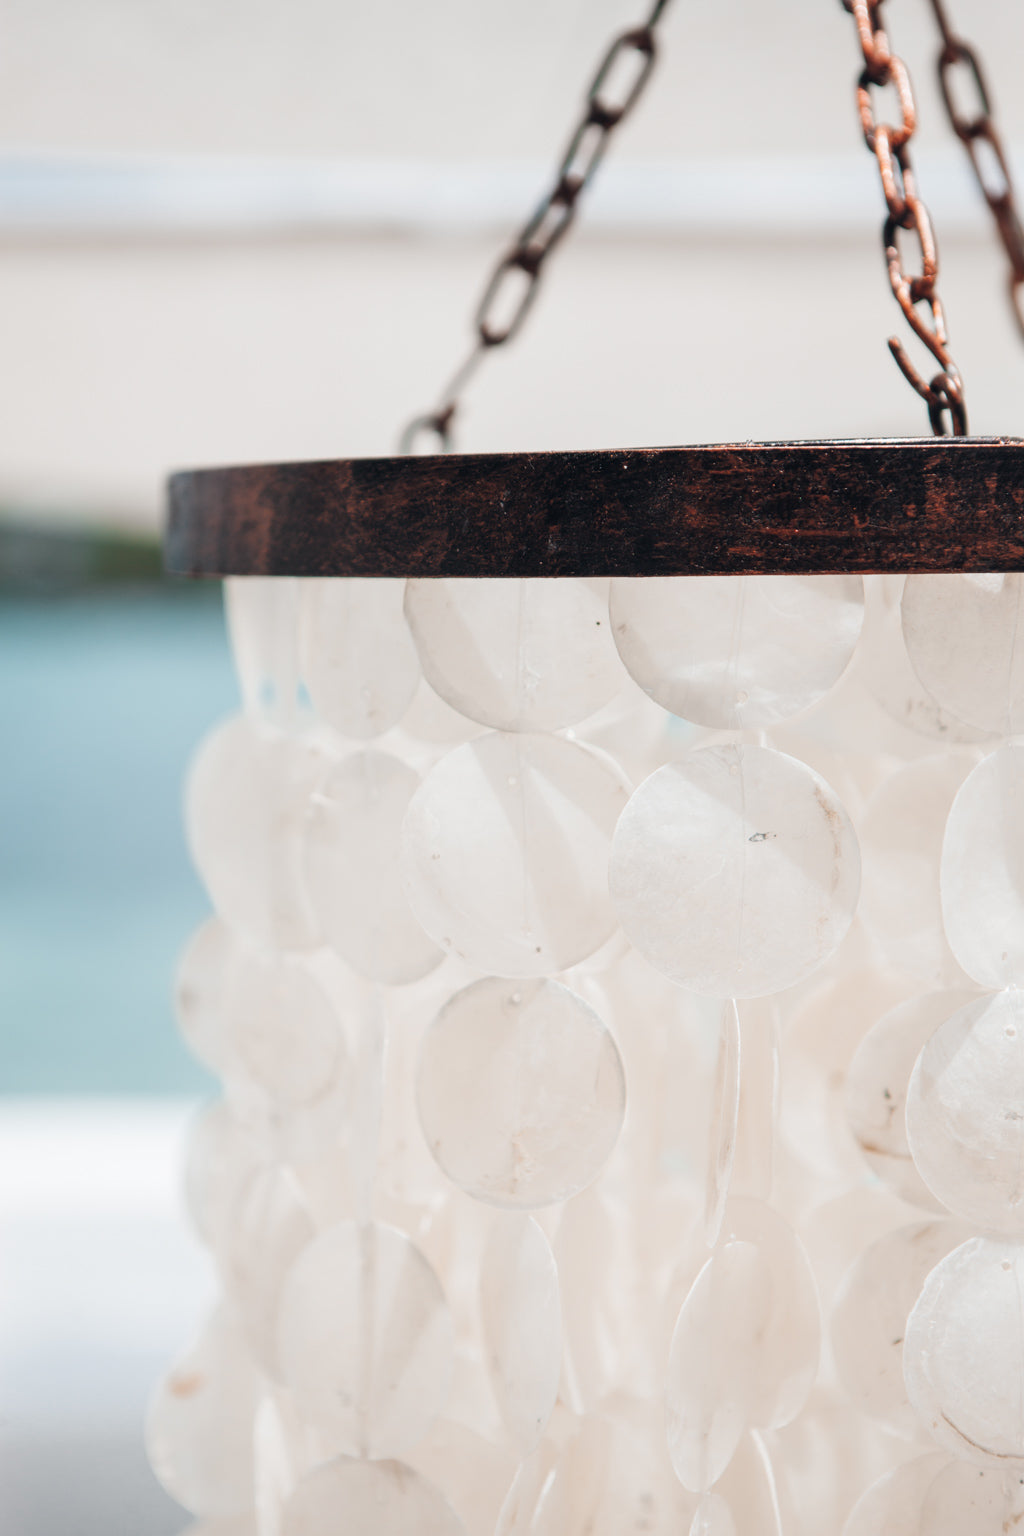 Large Capiz mother-of-pearl pendant chandelier